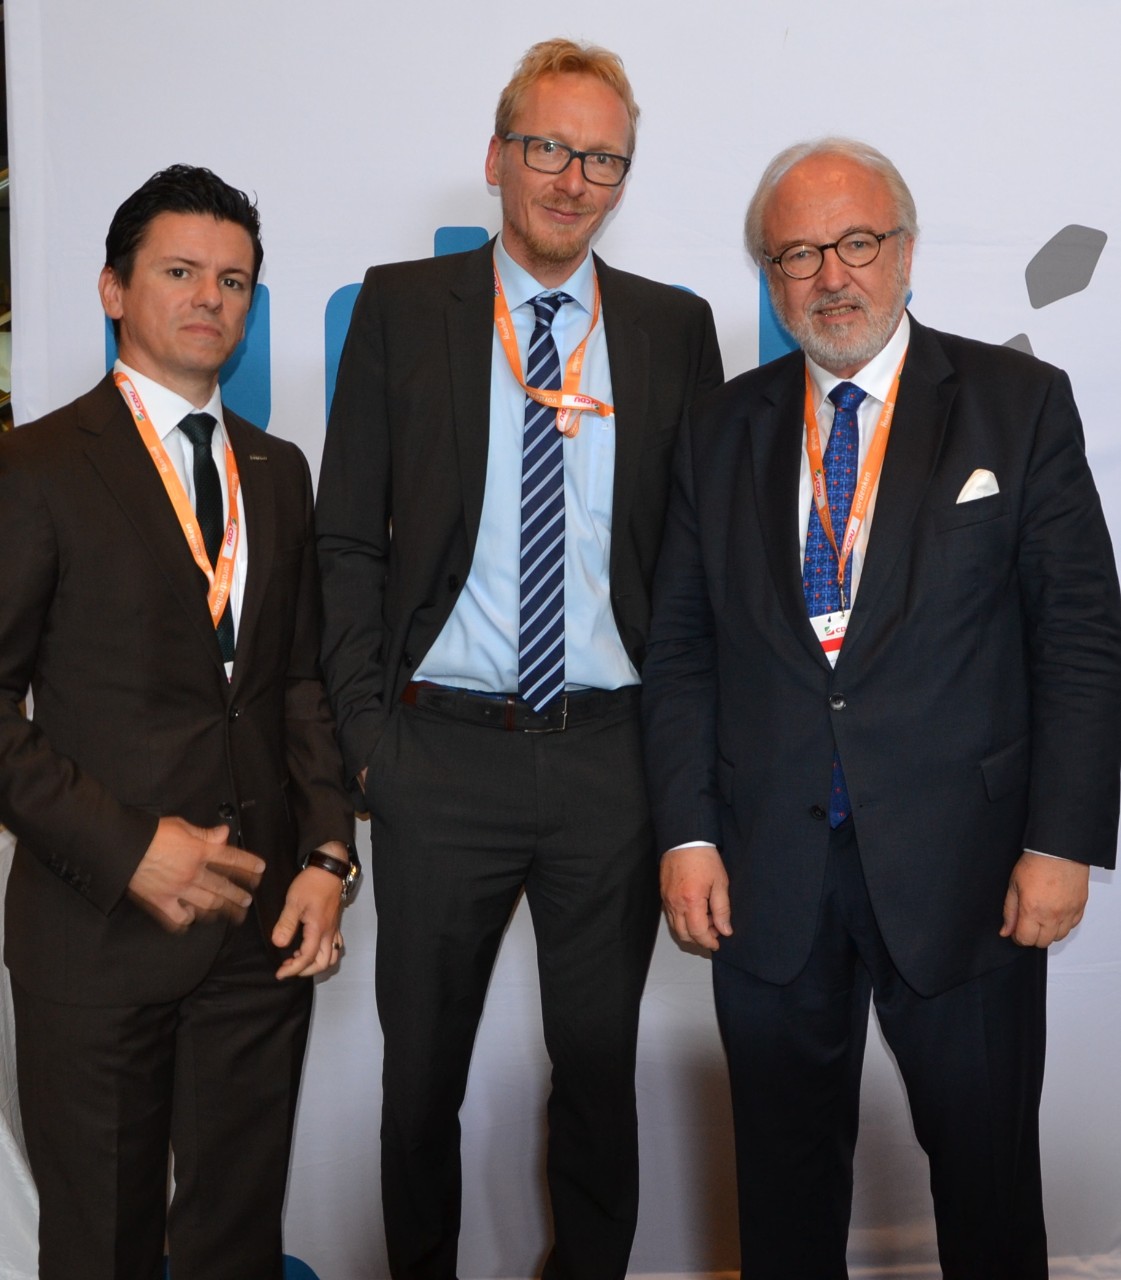 Foto vom CDU Landesparteitag am 11.6.16 v.l.n.r. Joao Rodrigues (BARMER GEK), Dirk Ruiss (vdek NRW) und Rudolf Henke (MdB)